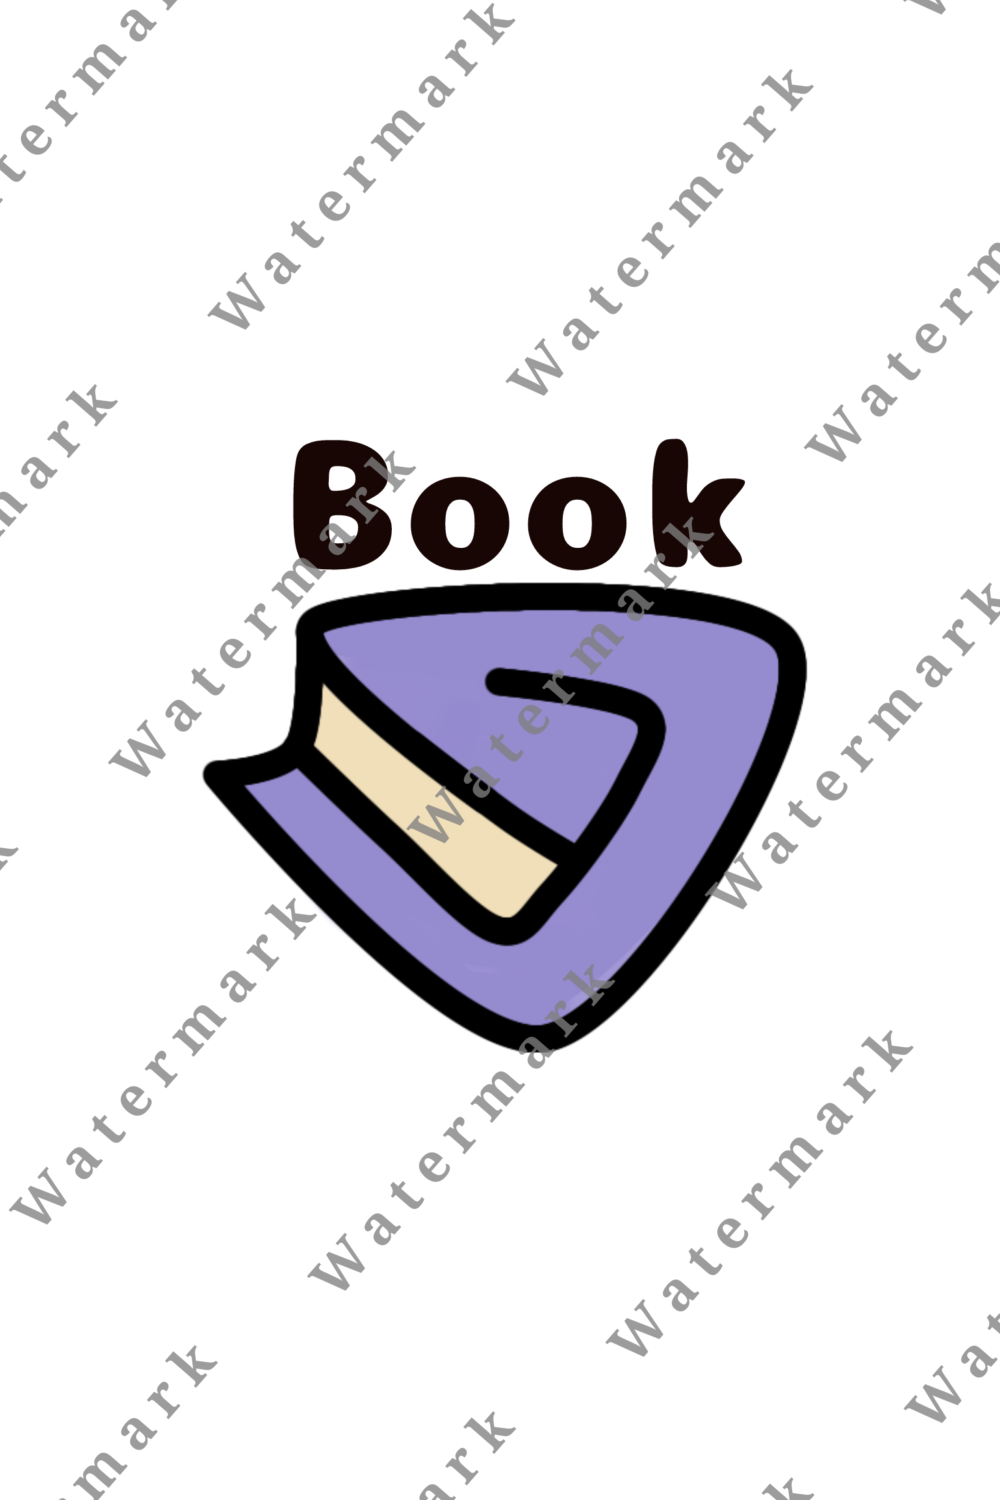 Book logo pinterest preview image.